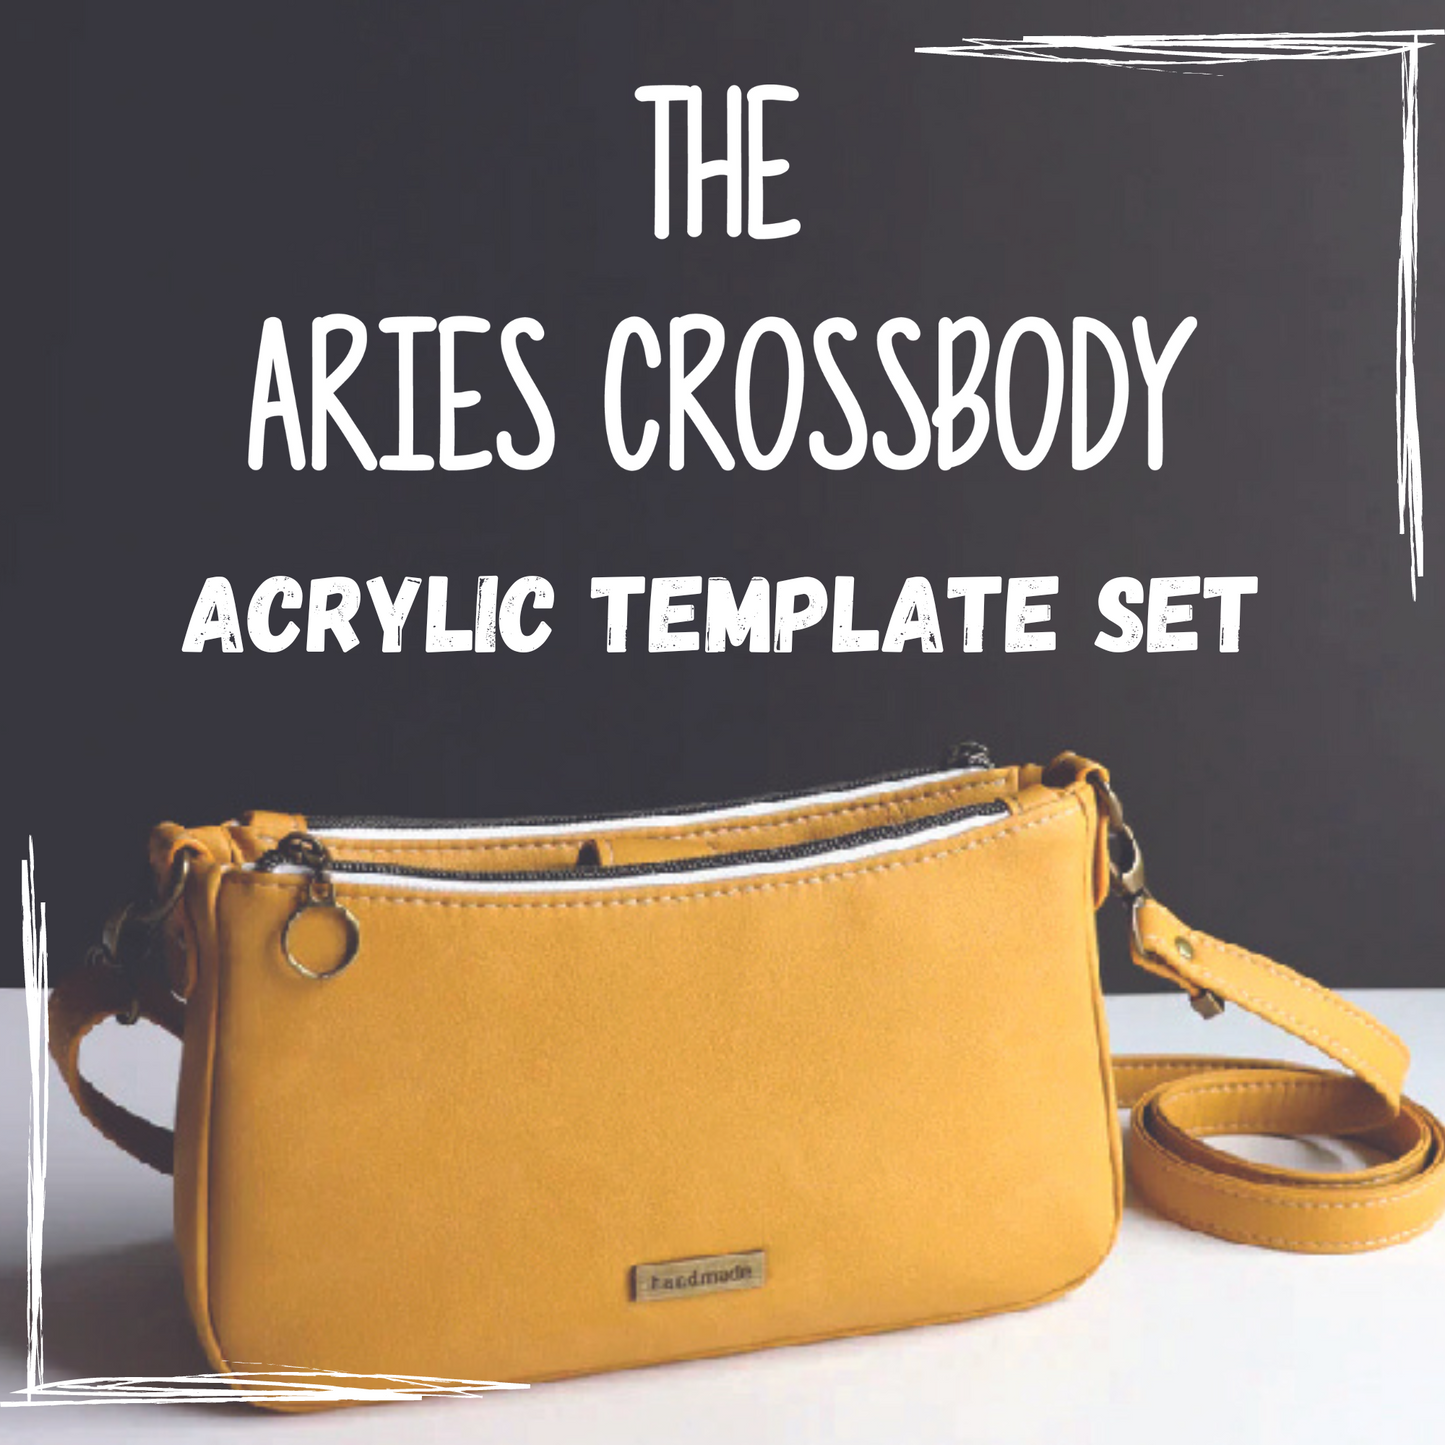 Aries Crossbody Acrylic Template Set